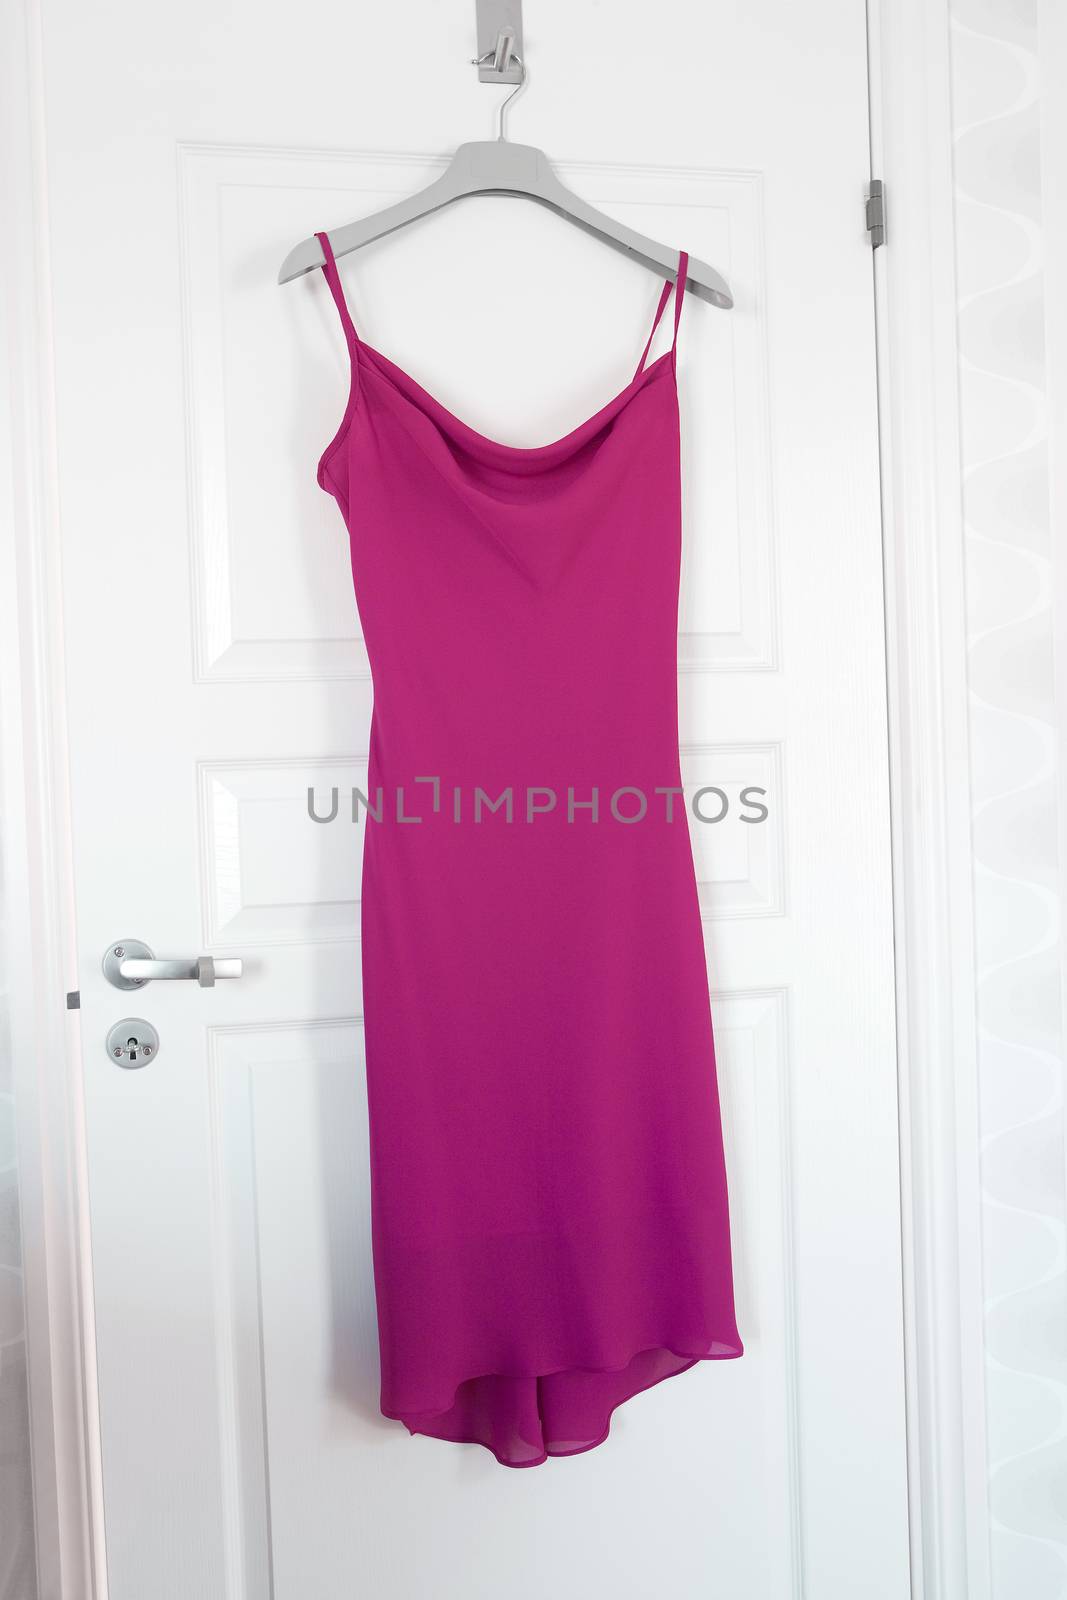 Pink Dress by gemenacom